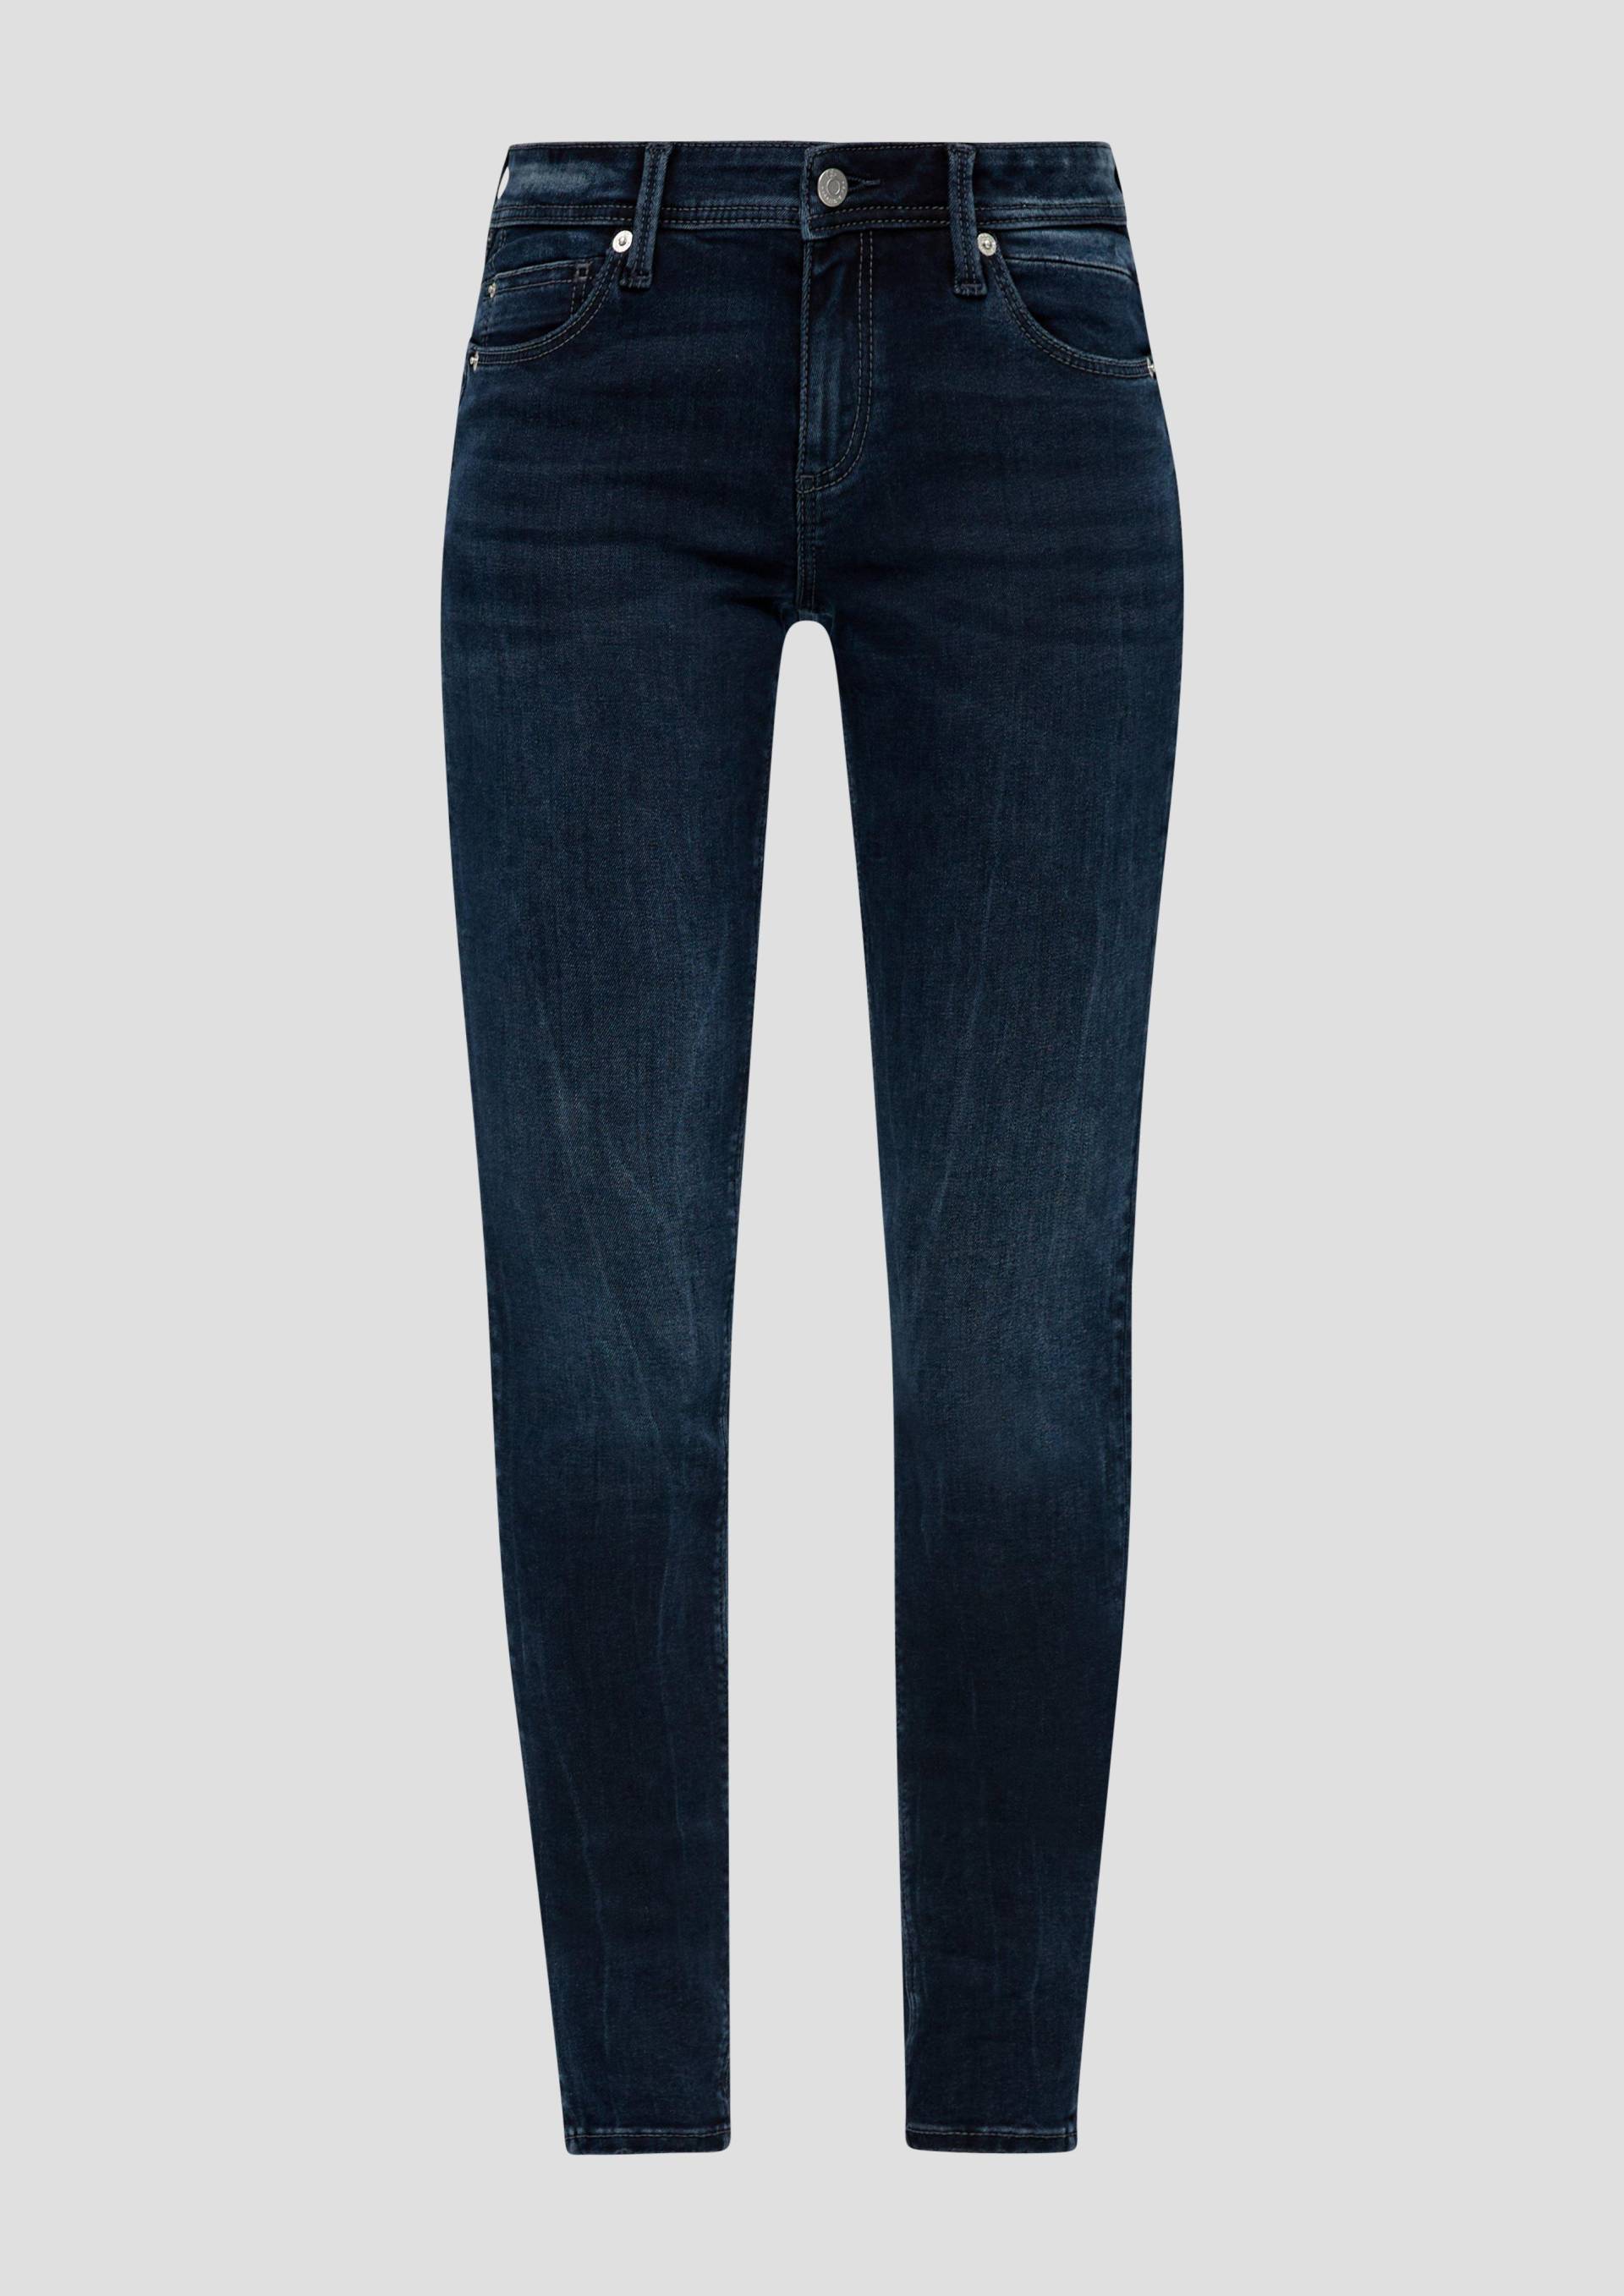 QS - Jeans / Skinny Fit / Low Rise / Skinny Leg, Damen, blau von QS